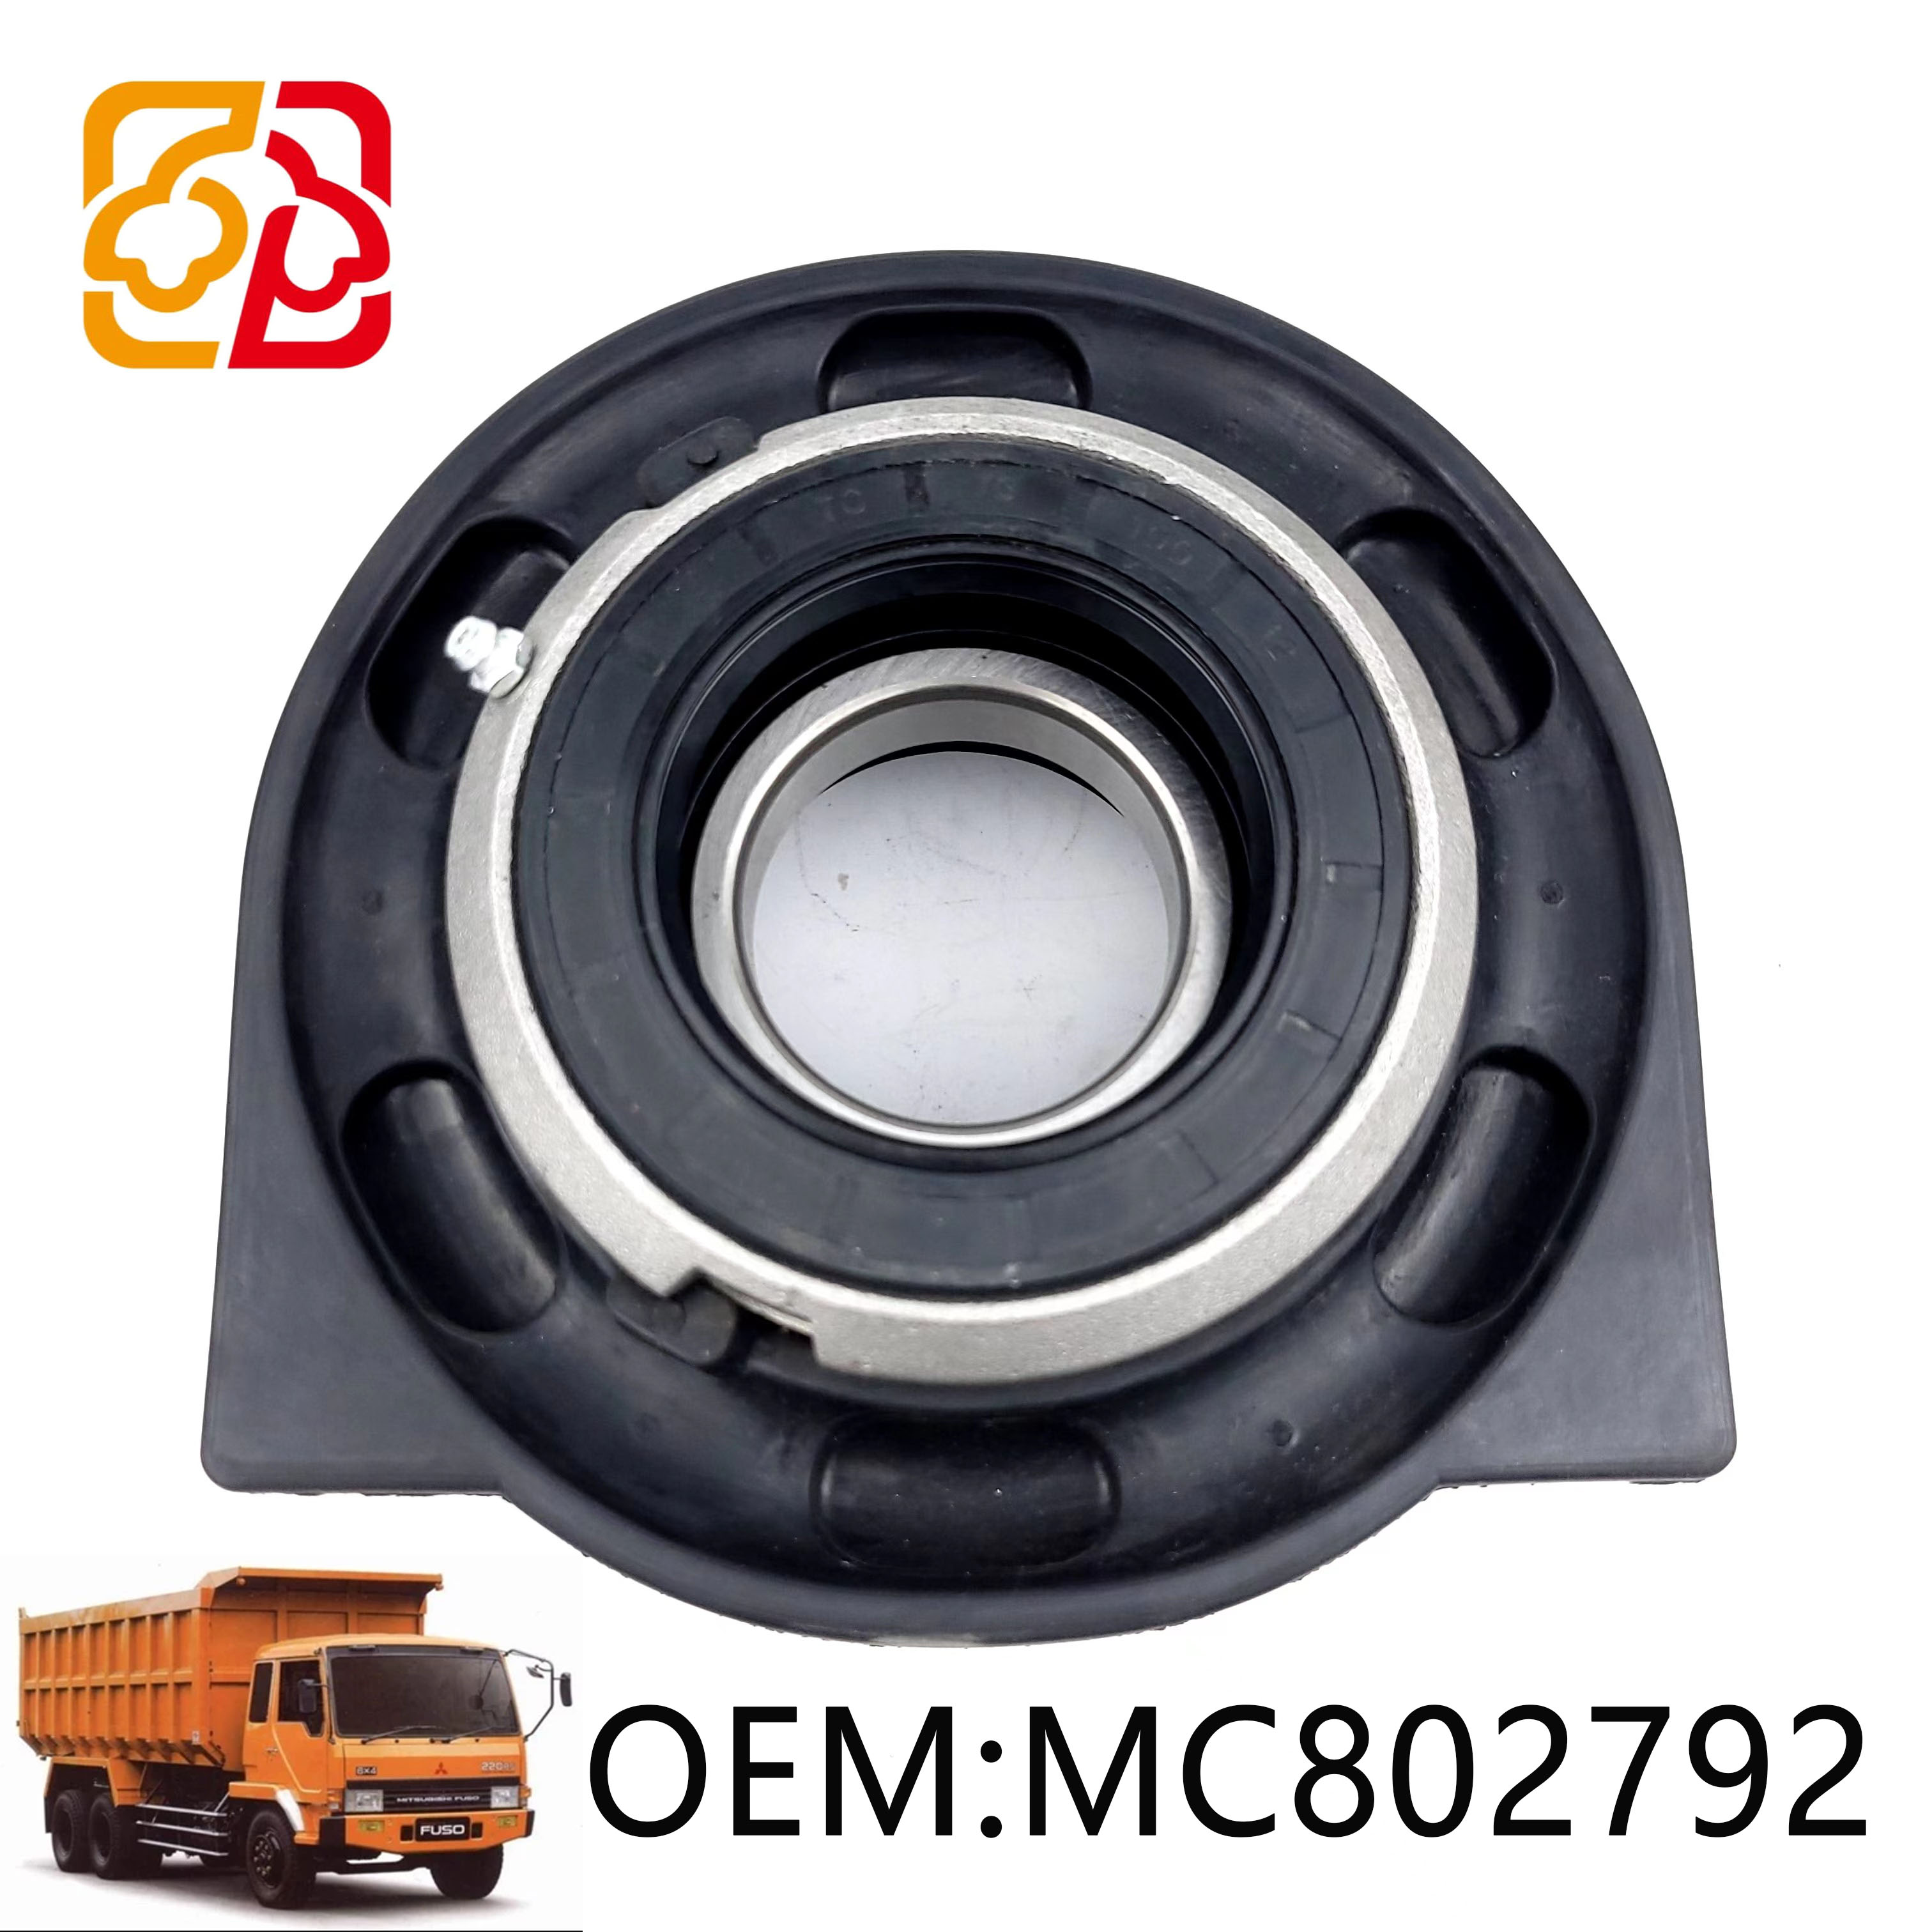 Truck axle pad center bearing support OEM MC802792